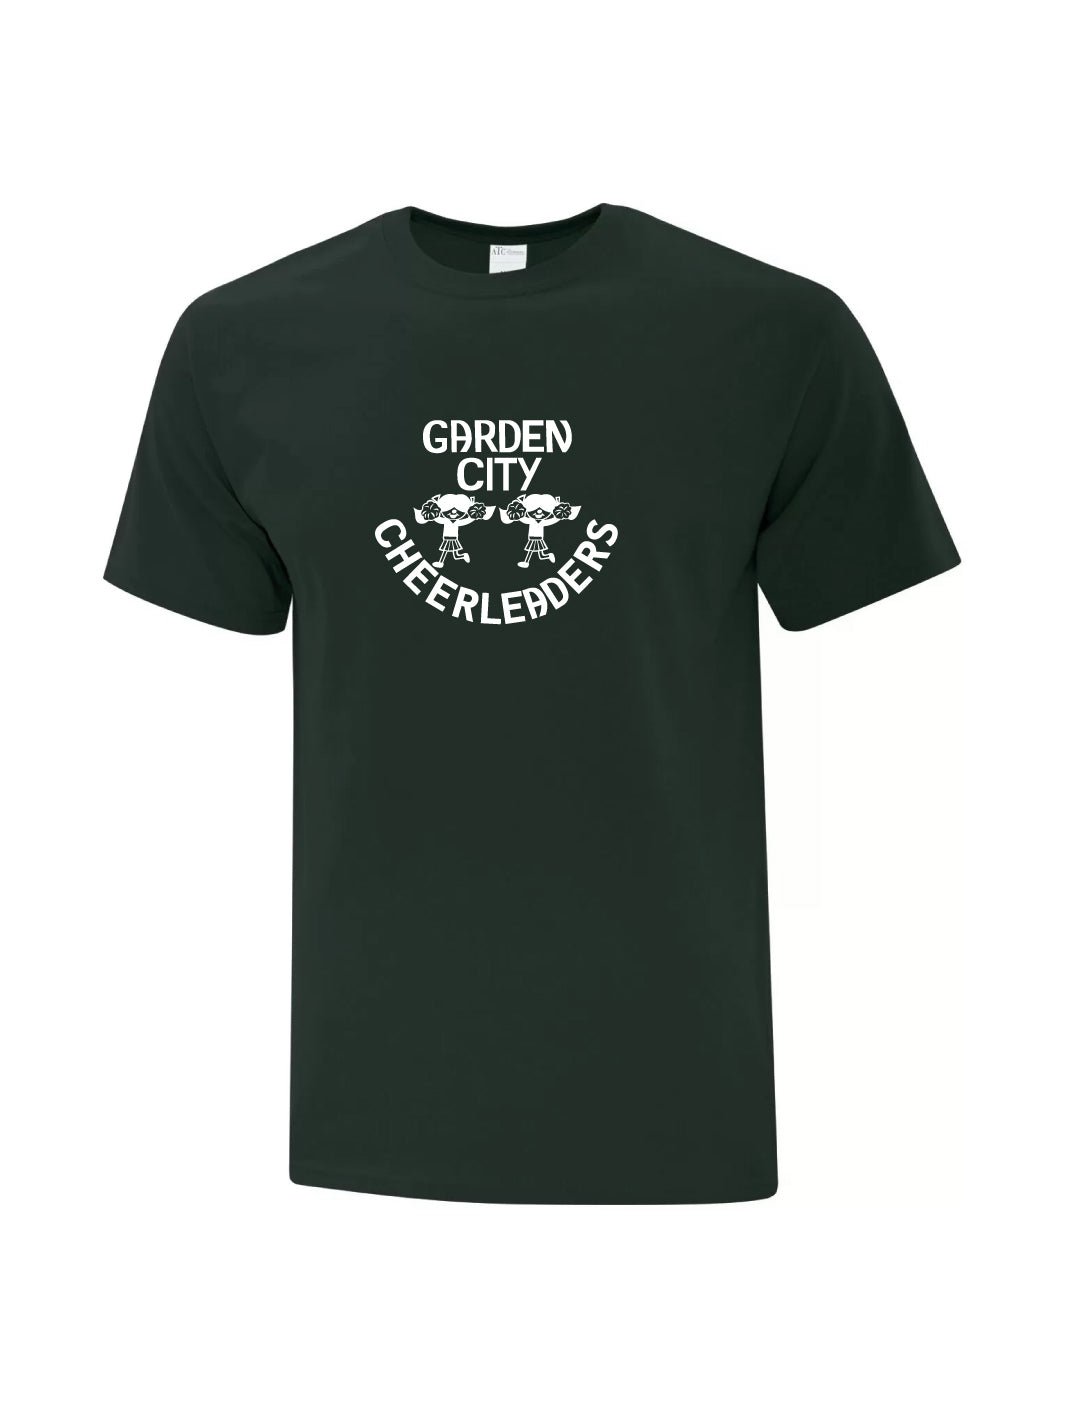 Youth Garden City Cheerleaders T-shirt - Oddball Workshop